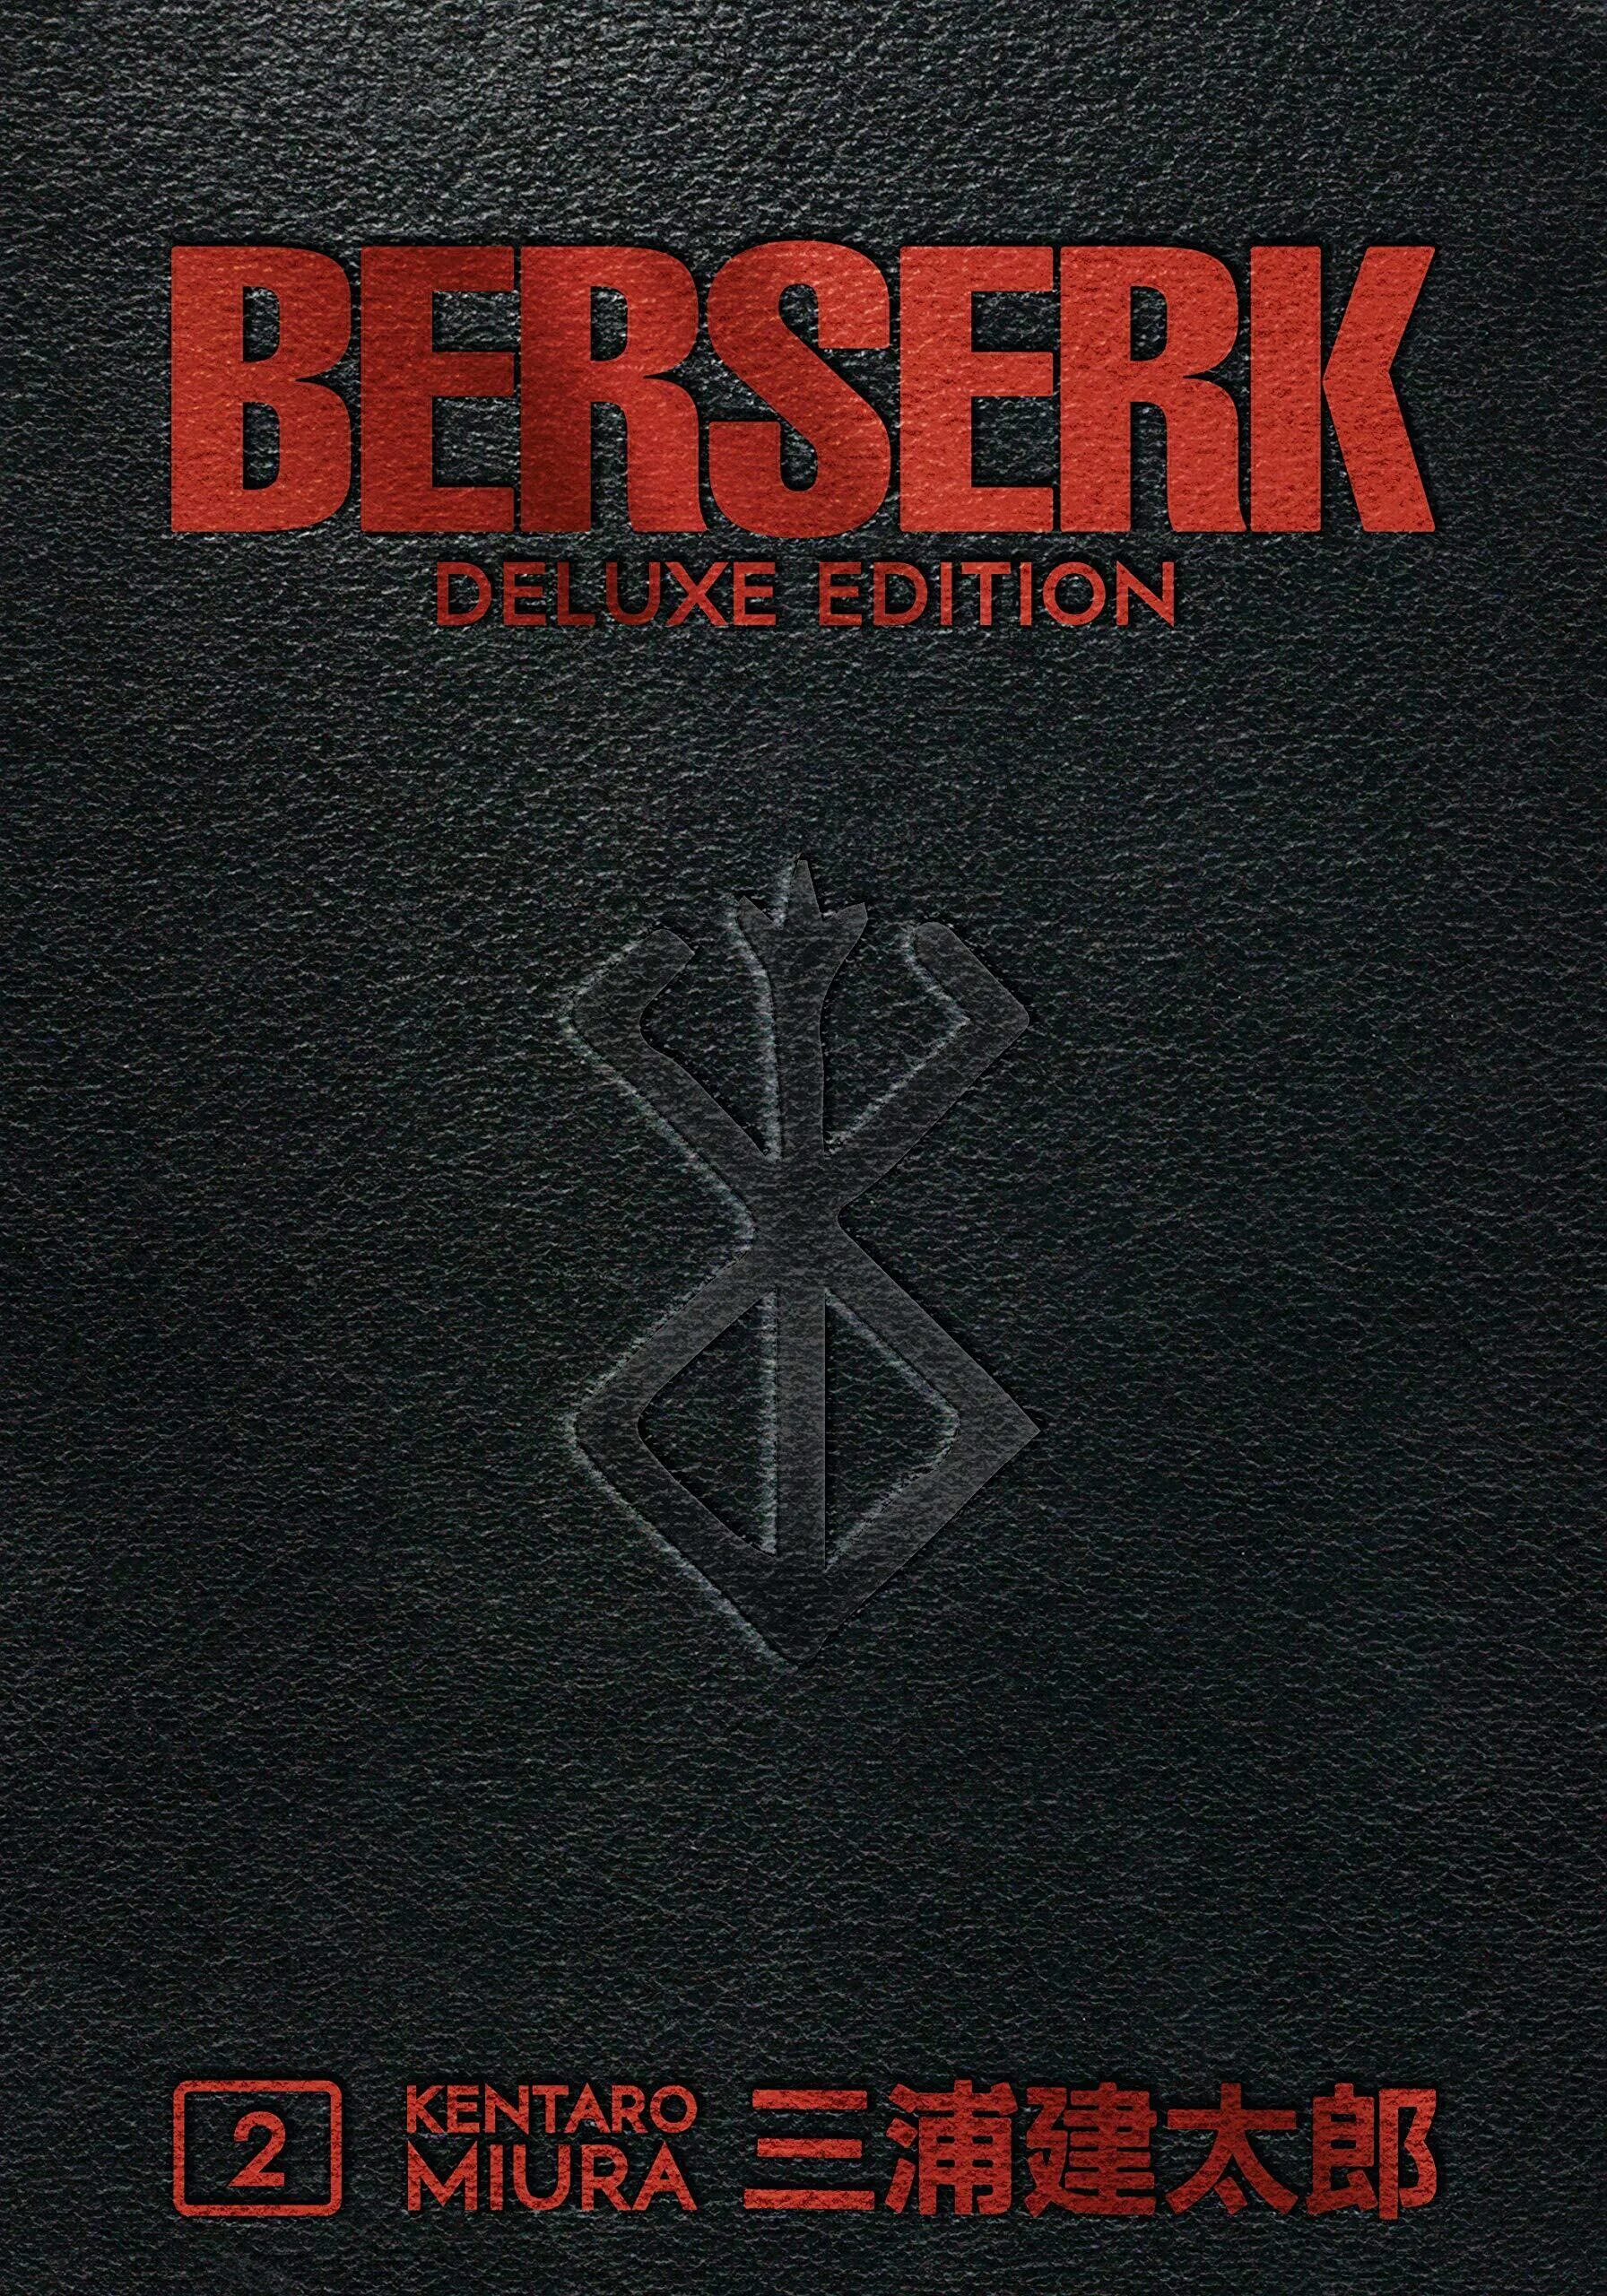 Tom deluxe. Berserk Deluxe Volume 4. Книга Берсерк Делюкс. Deluxe издание манги Берсерк. Berserk Deluxe Volume 1.